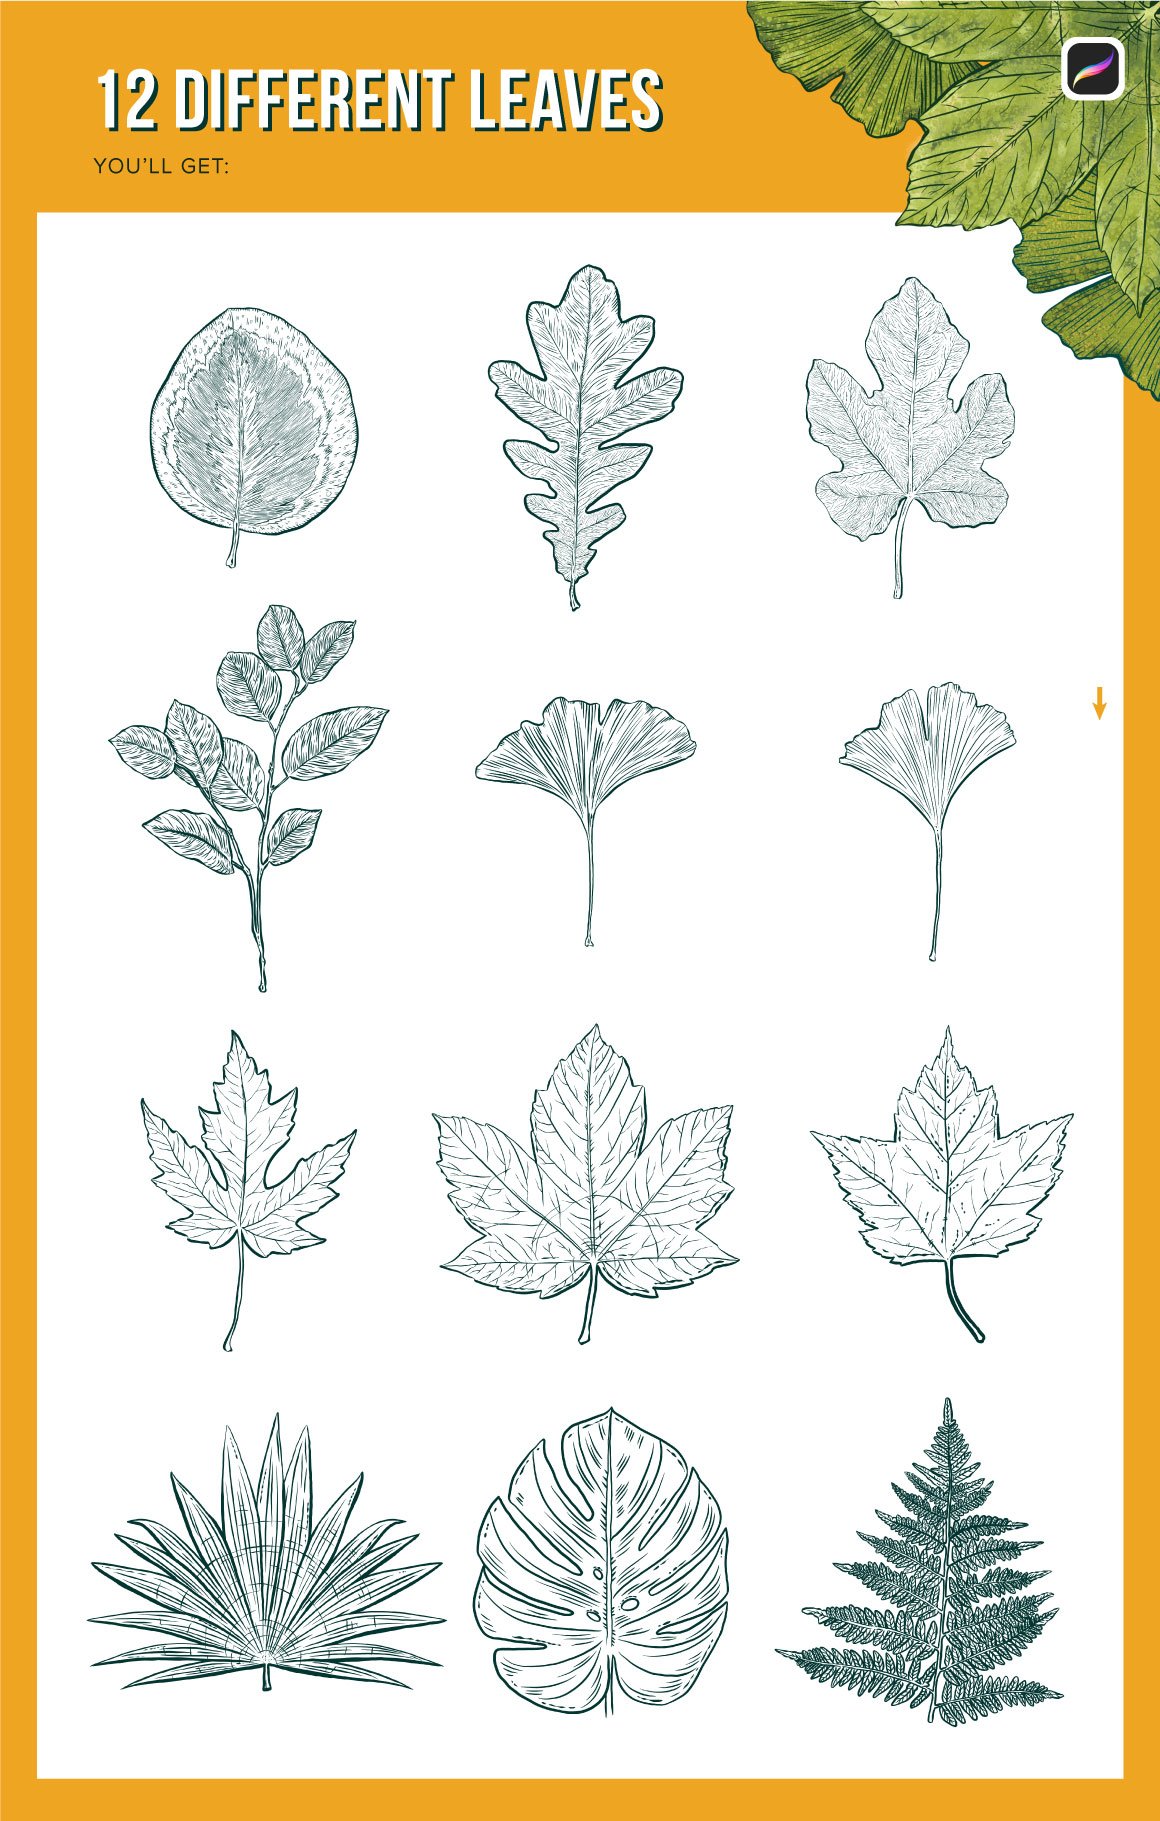 12 Leaf Procreate Stamp Brushes